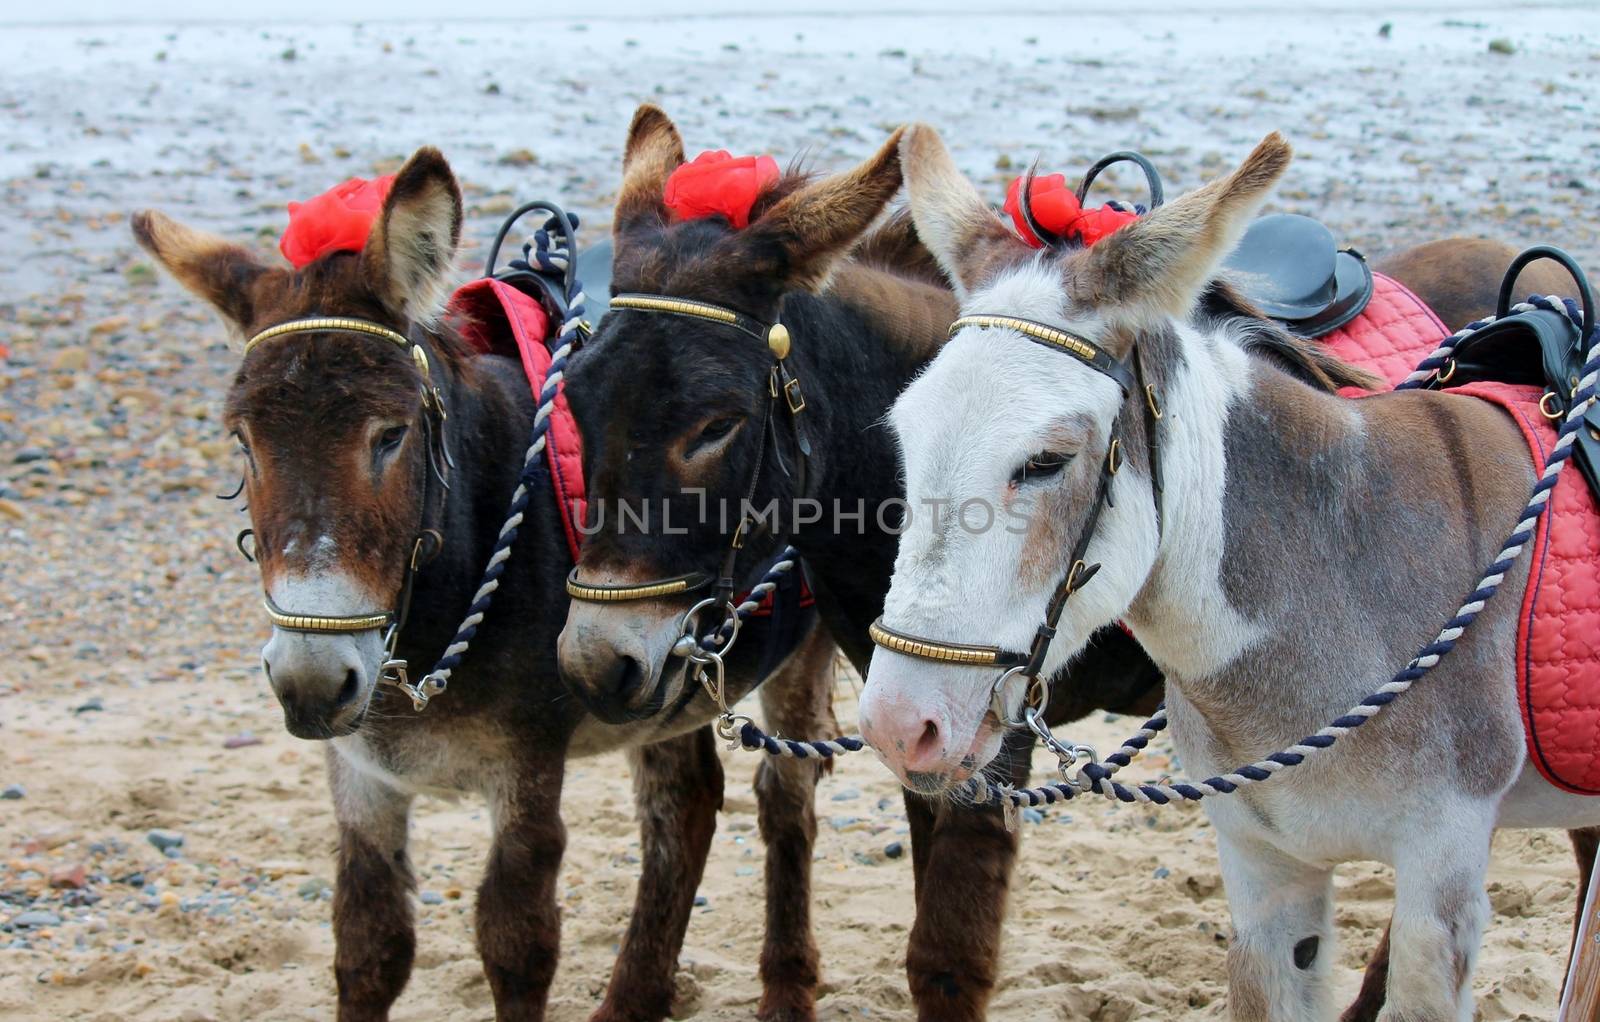 Seaside donkeys at the beach